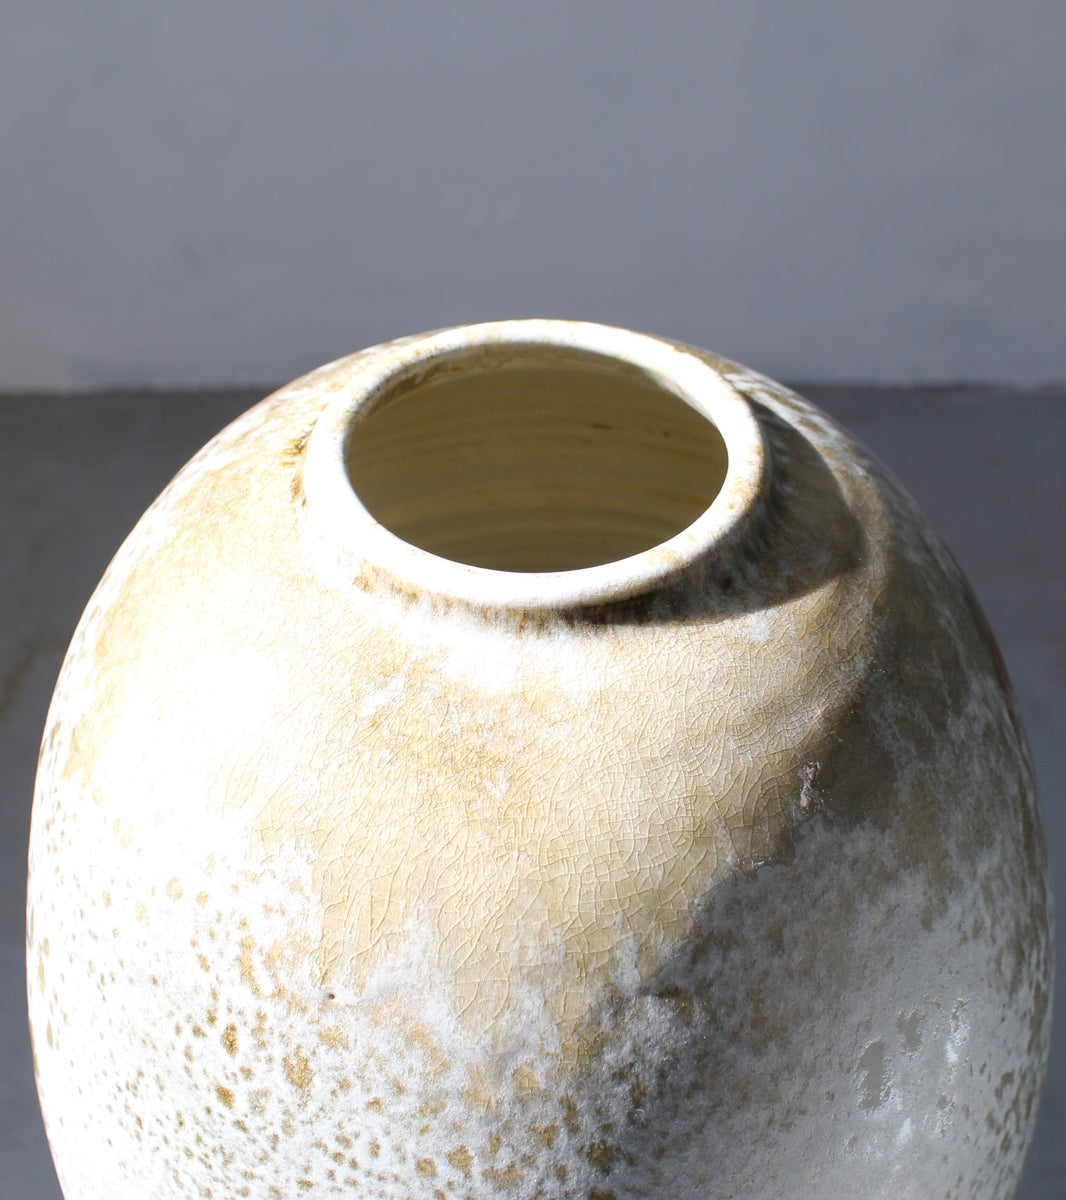 Enormous Torpedo Shaped Vase <br> White & Brown Glaze